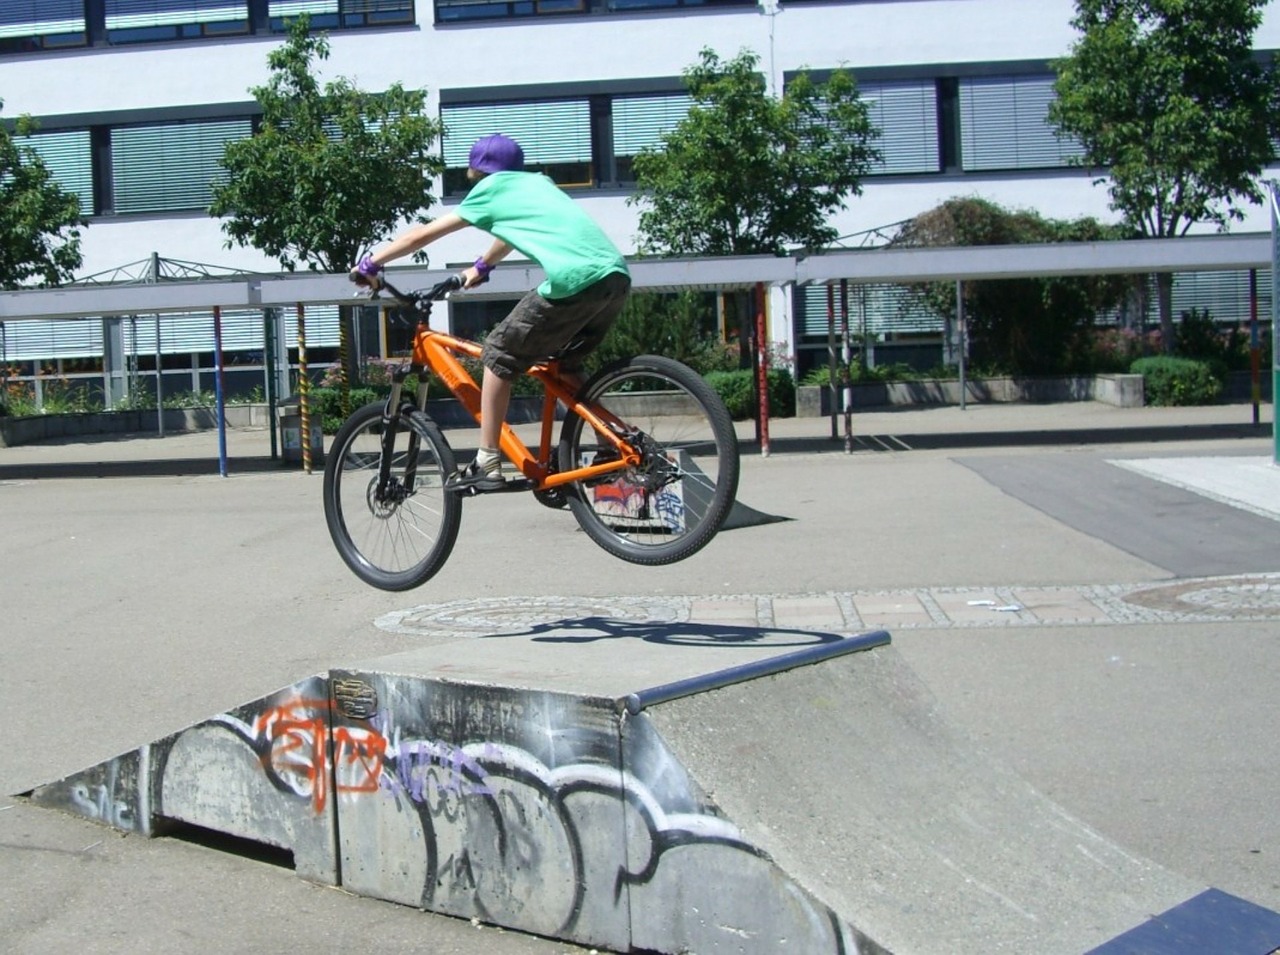 biker ramp jump free photo